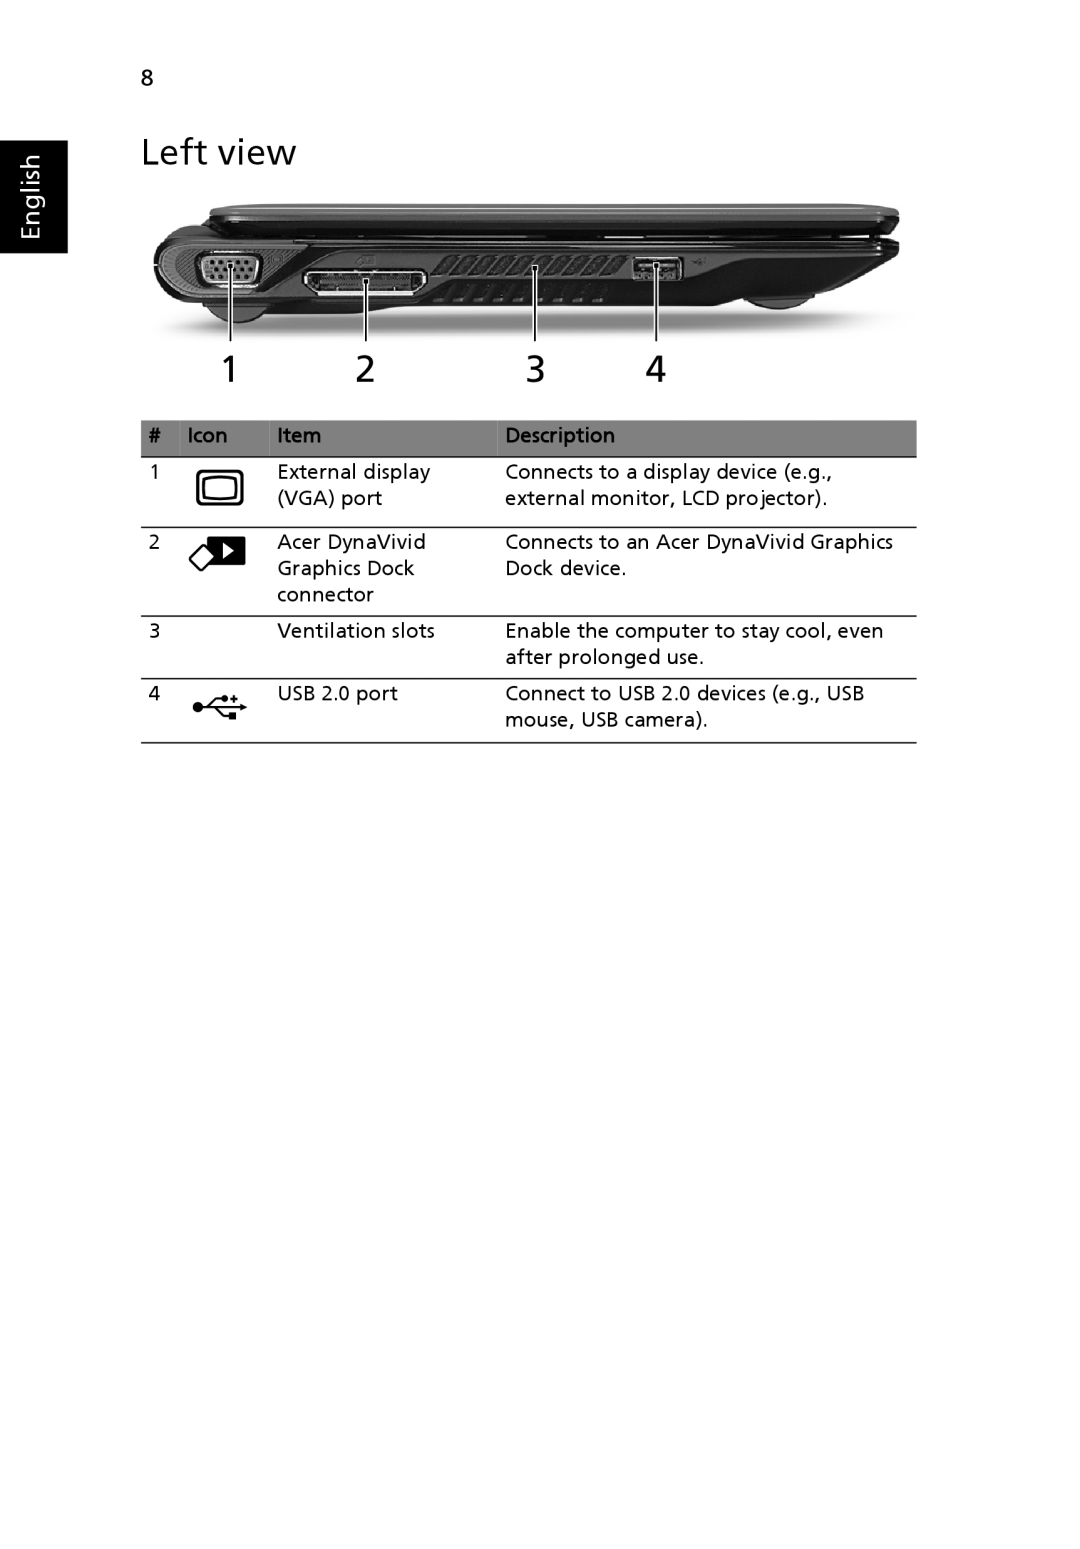 Acer 200 manual Left view, # Icon, English, Description 